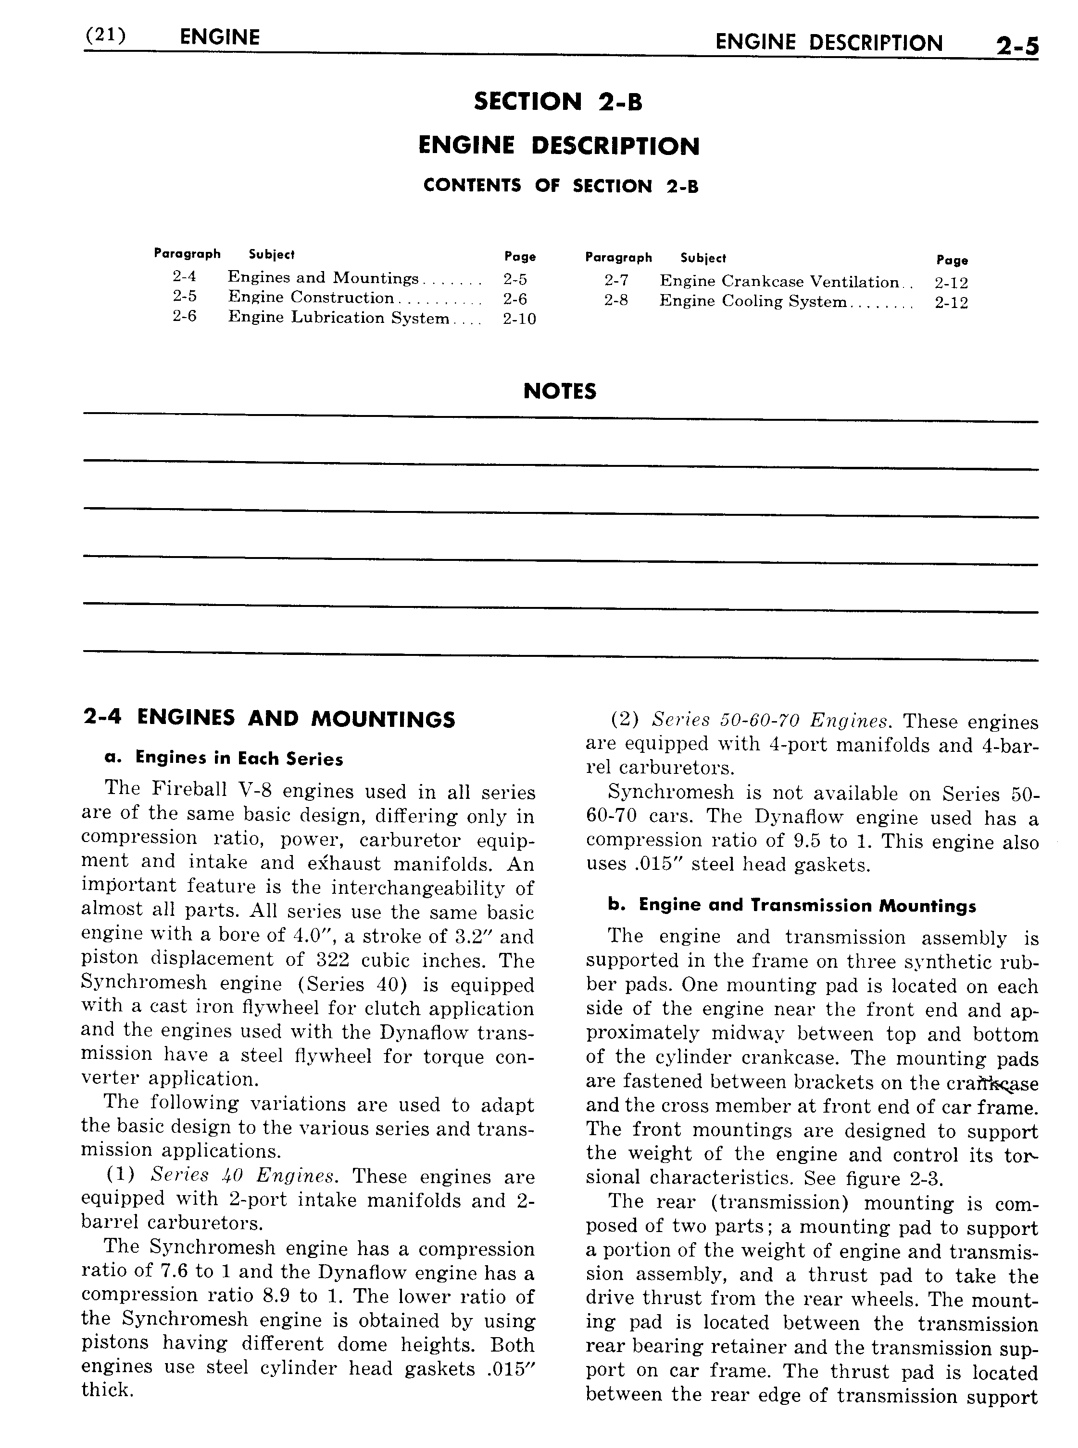 n_03 1956 Buick Shop Manual - Engine-005-005.jpg